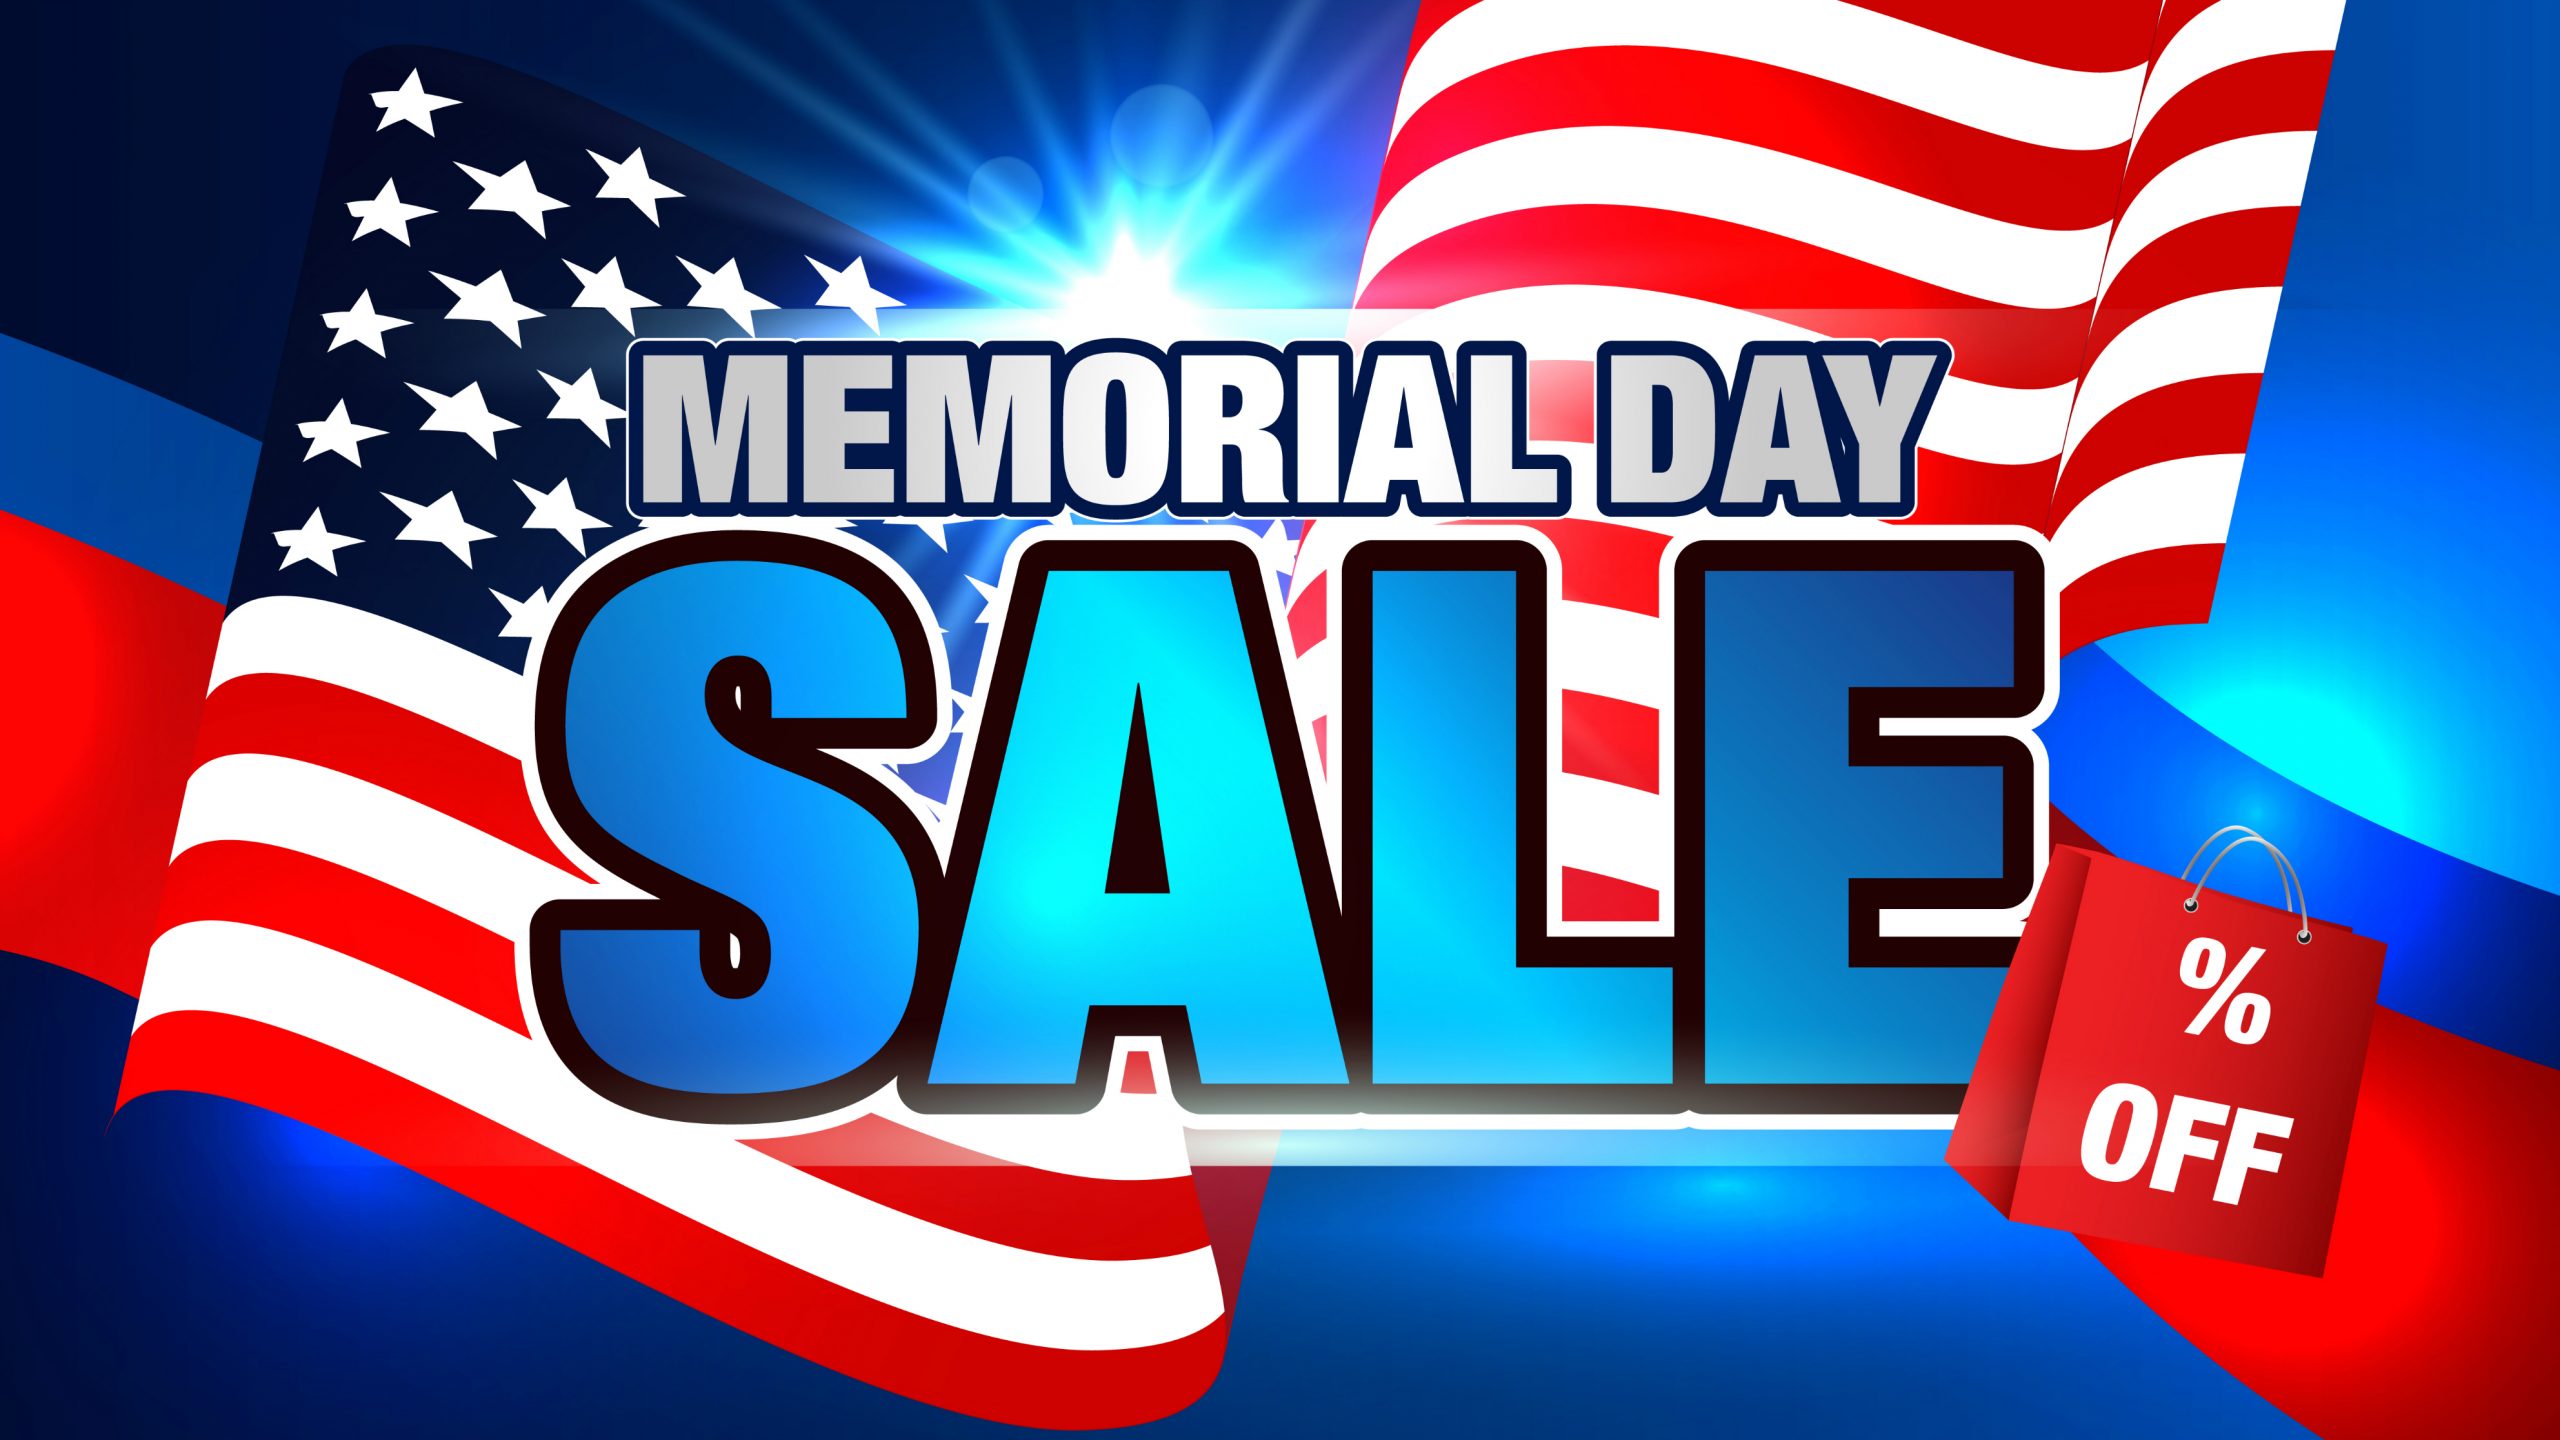 Best Buy’s Memorial Day sale 2020 deals on TVs, appliances, laptops